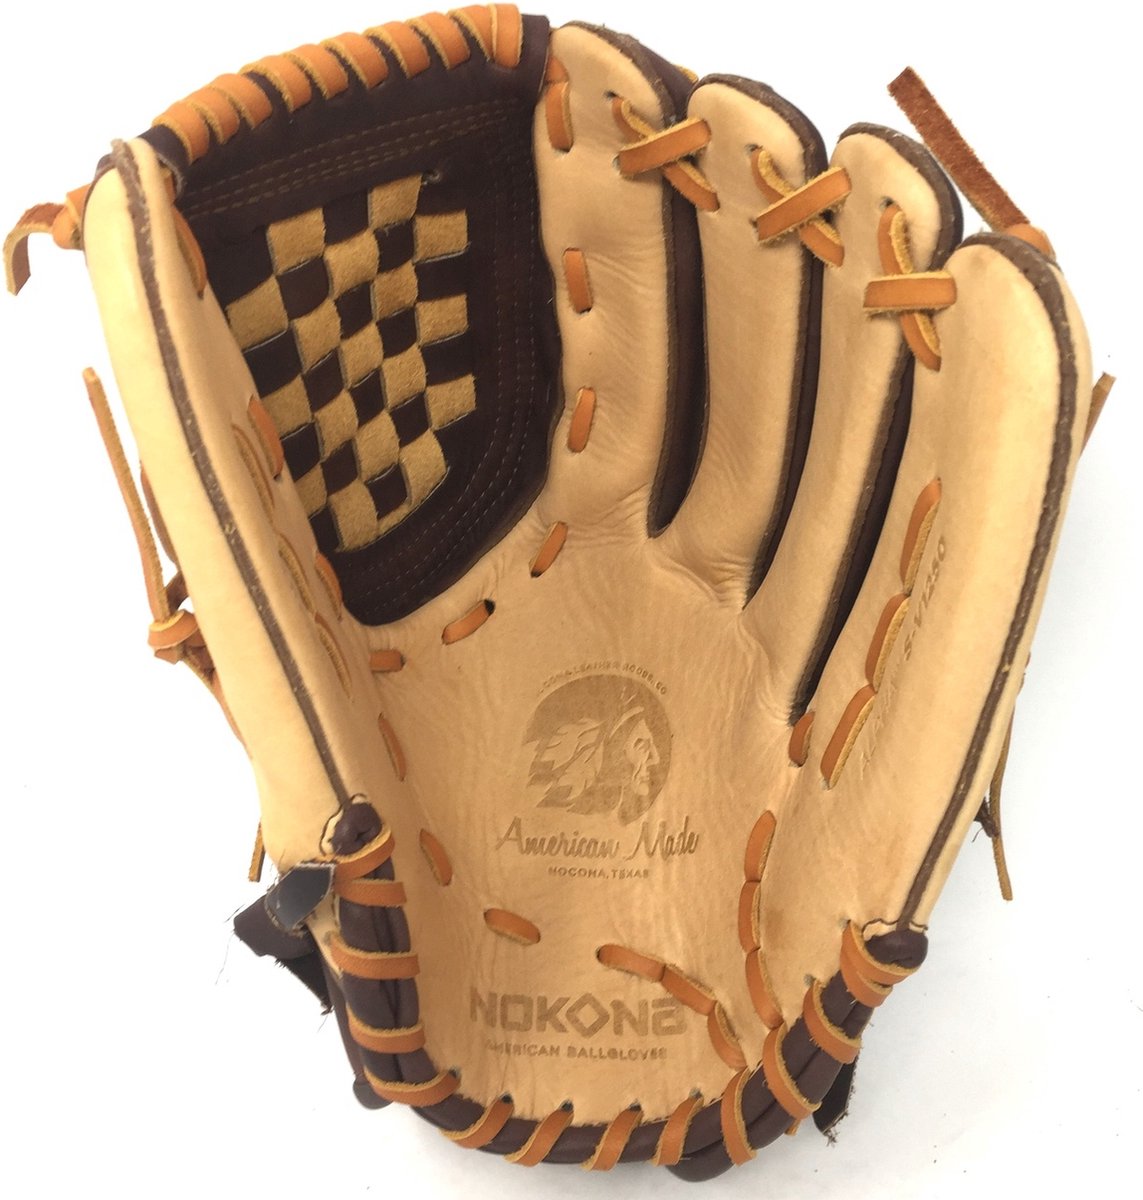 Baseball Glove - Softball Glove - Supersoft Leather - 12.5 Inch